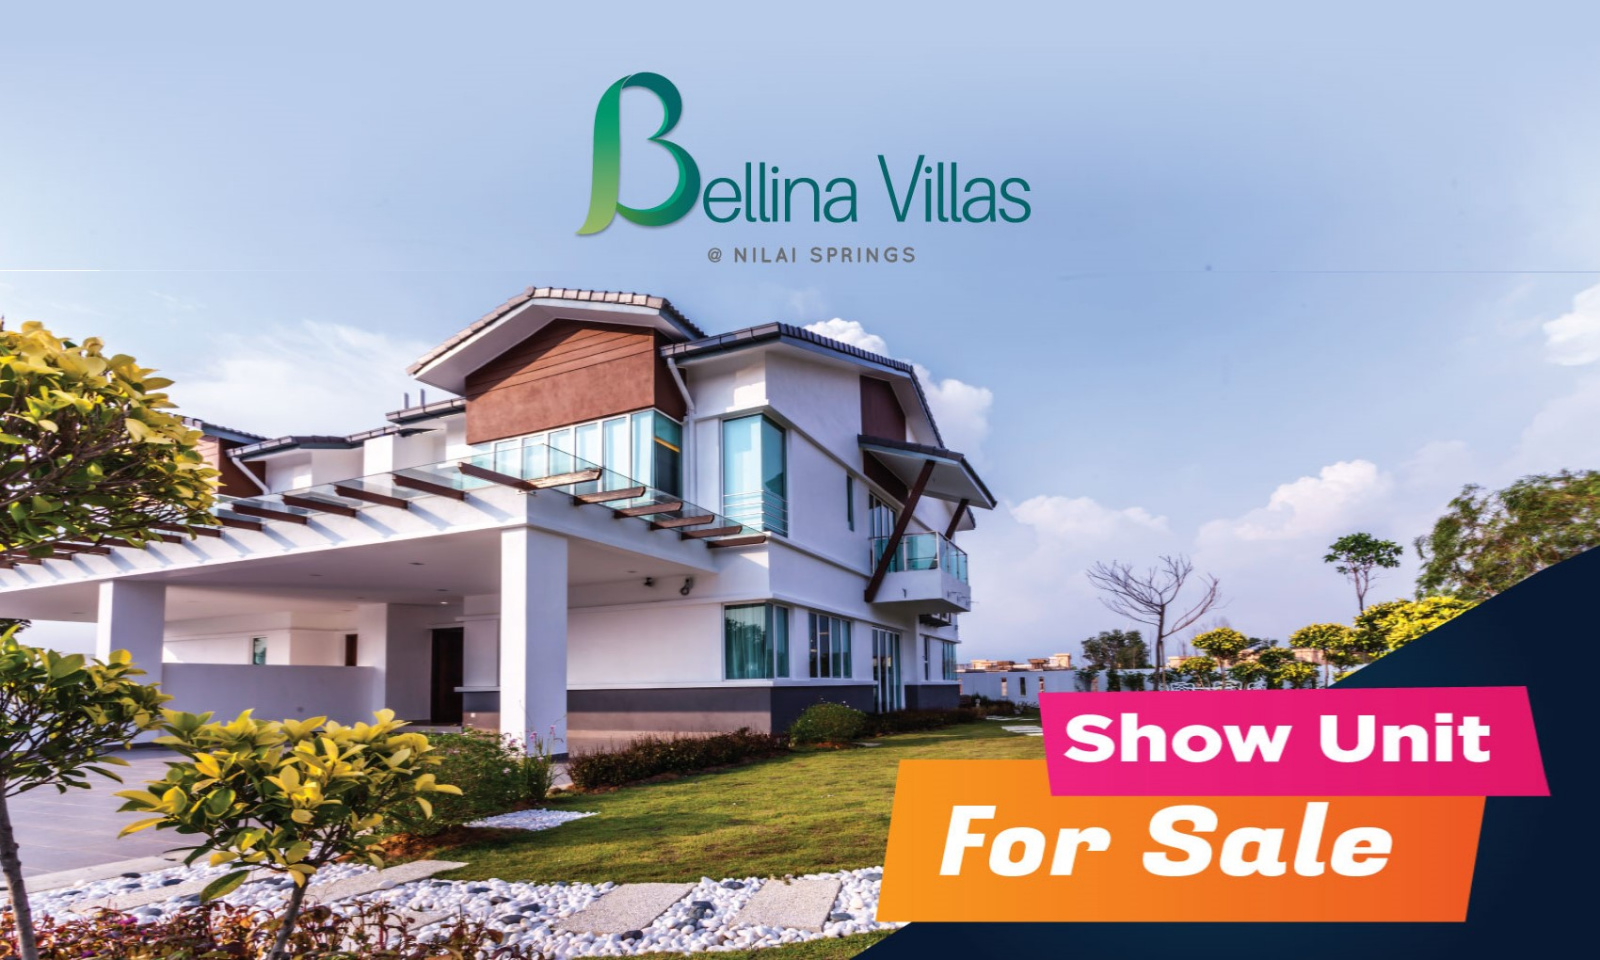 Bellina Villas Show Unit